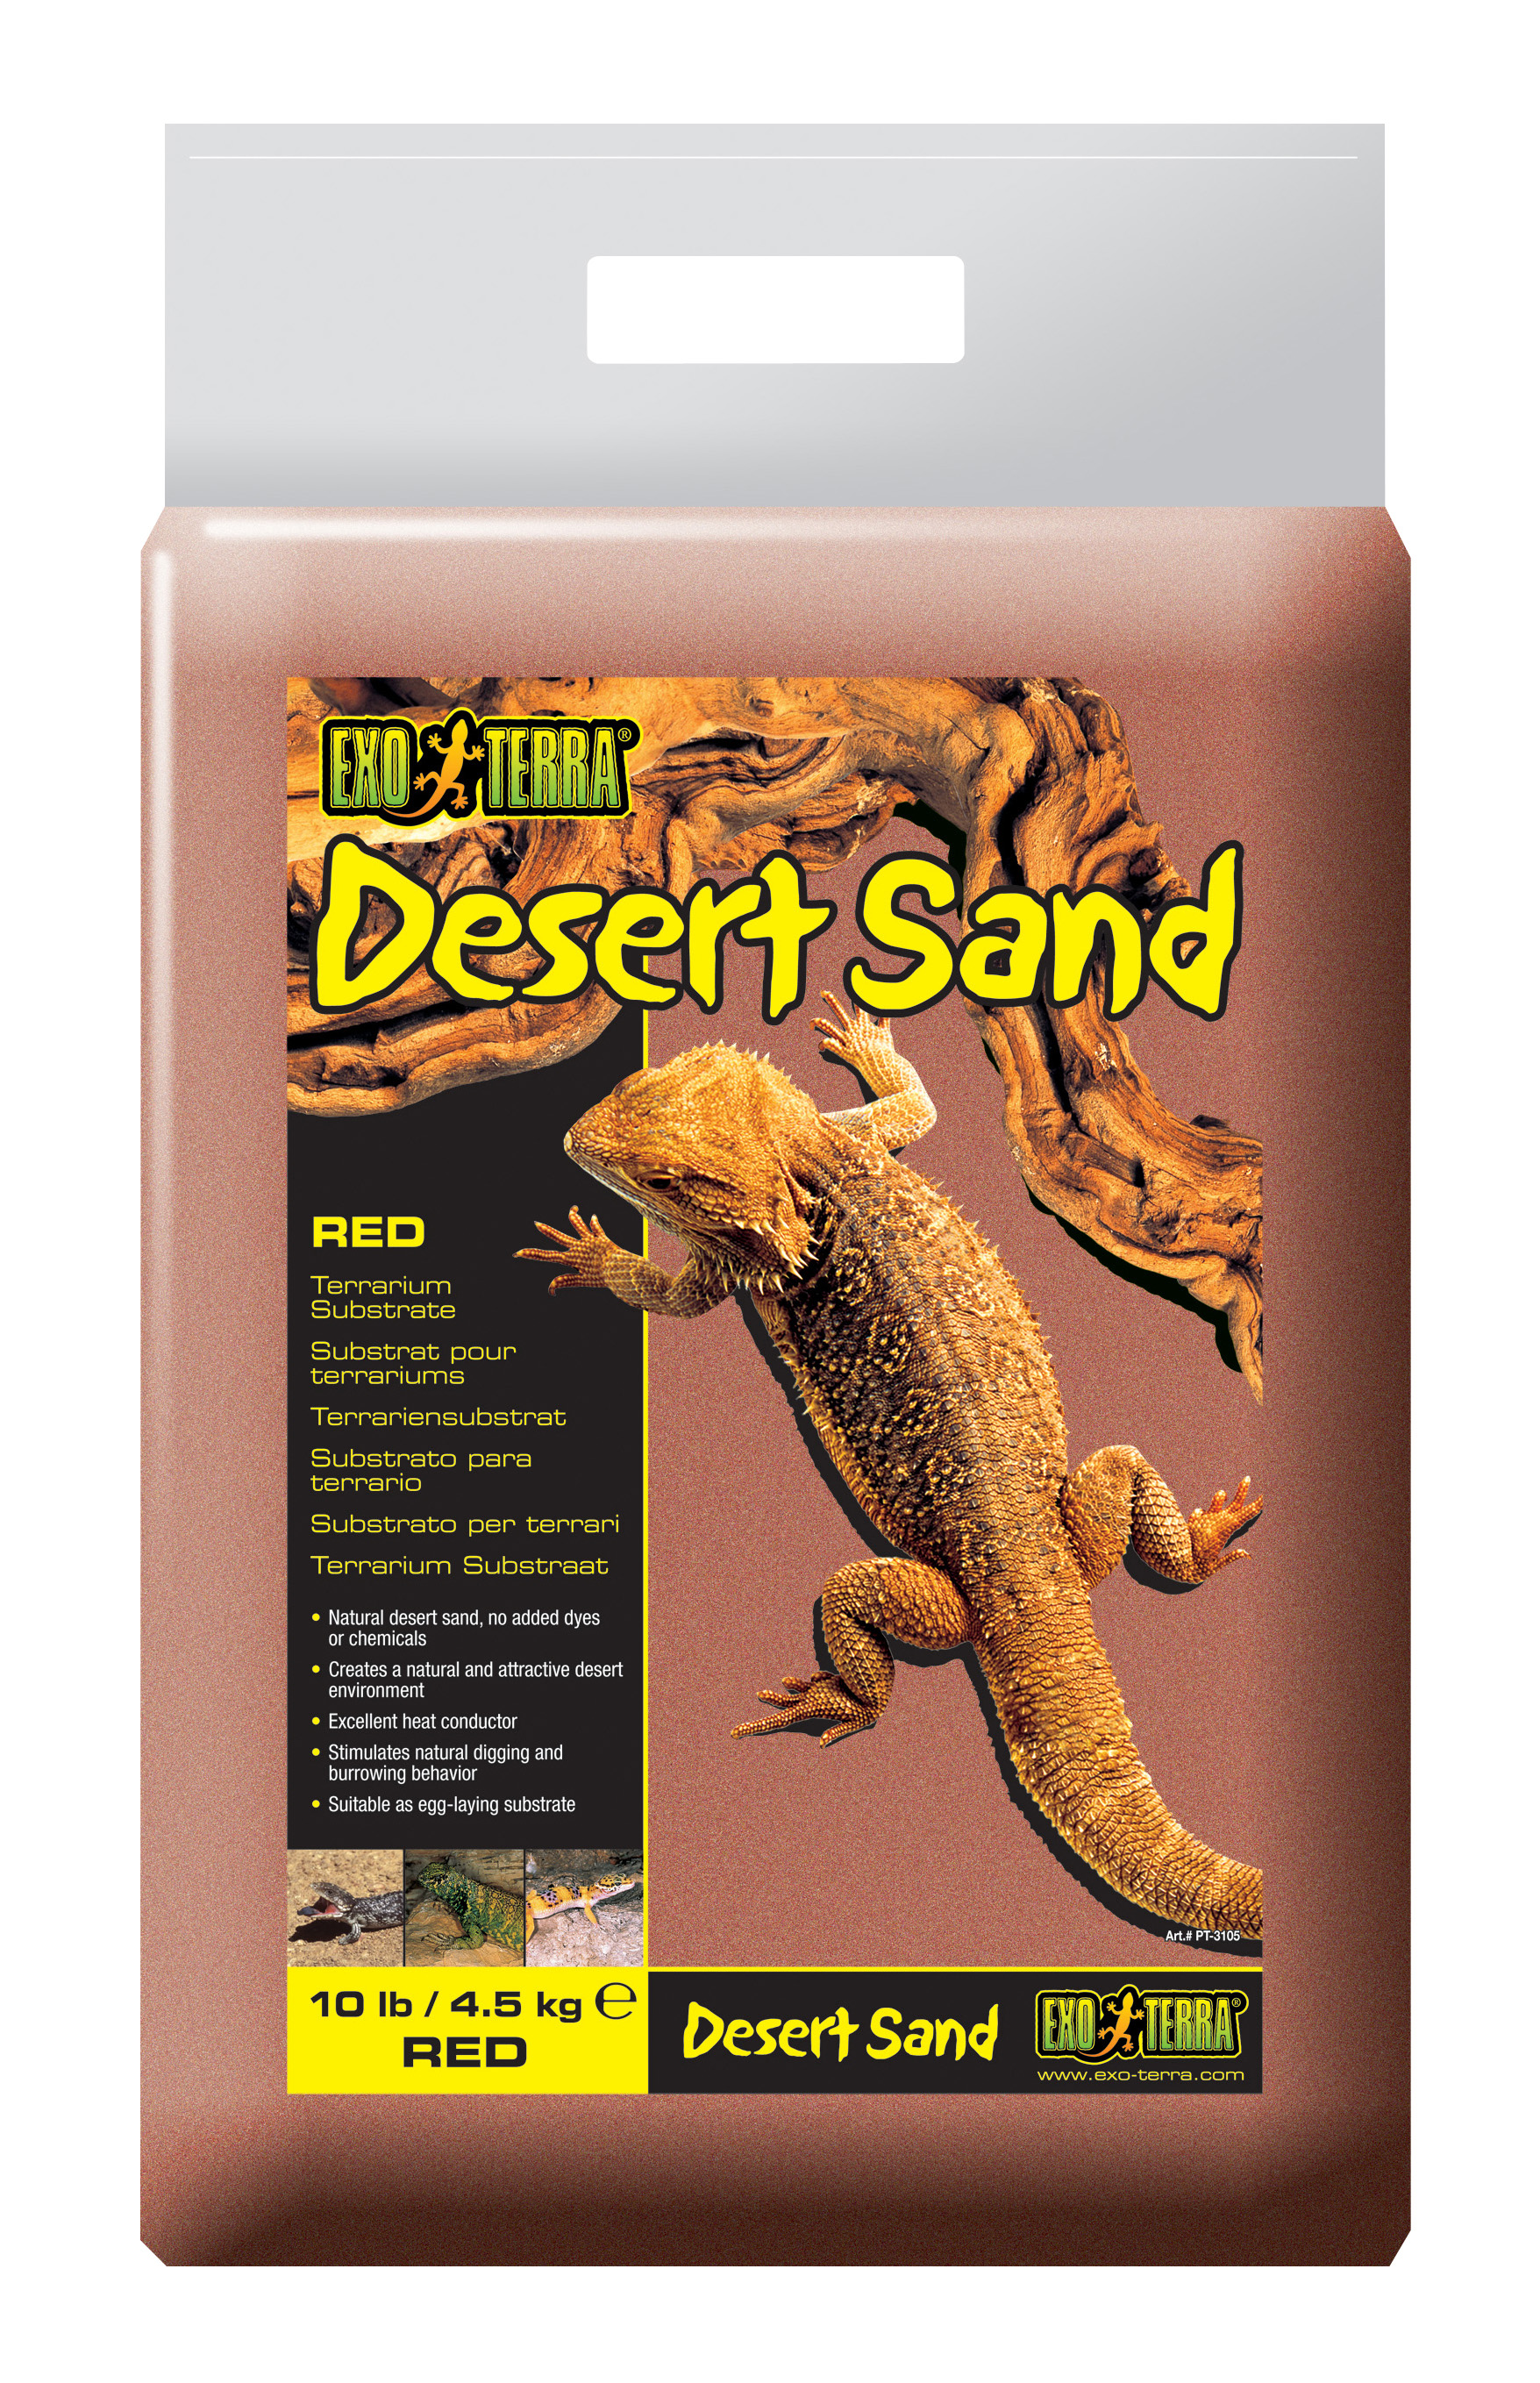 Ex desertsand terrariensubstrat rot - Product shot